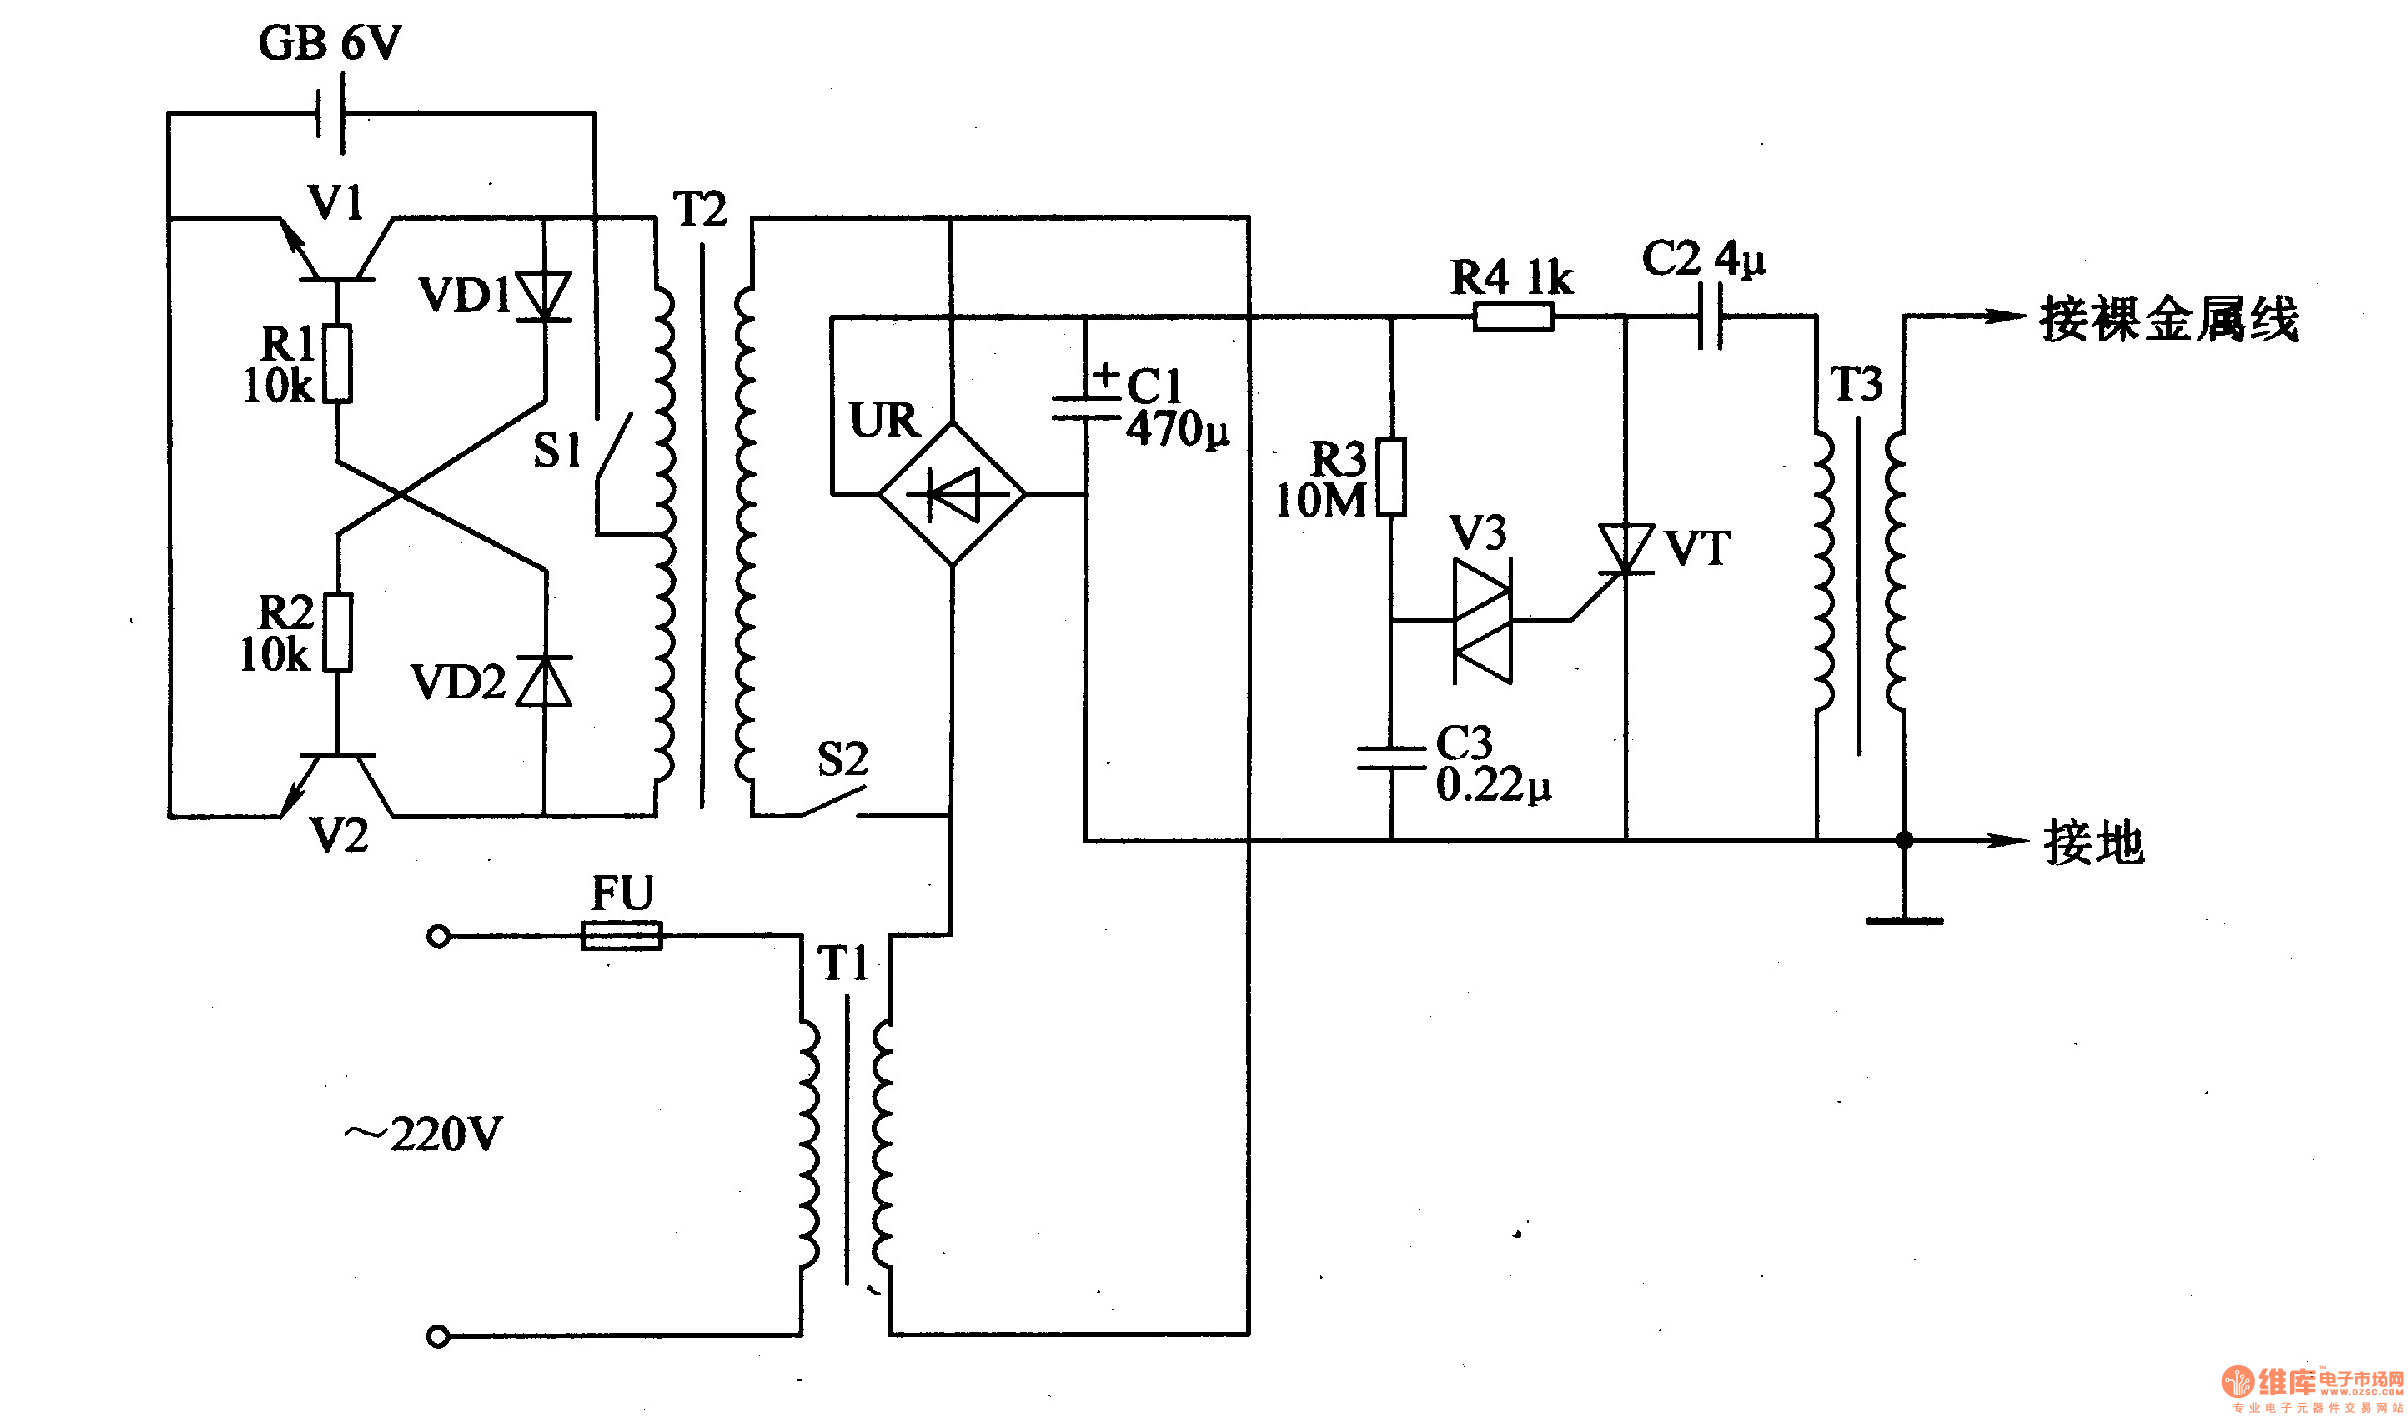 Electric fence control circuit 3 - Control_Circuit ...